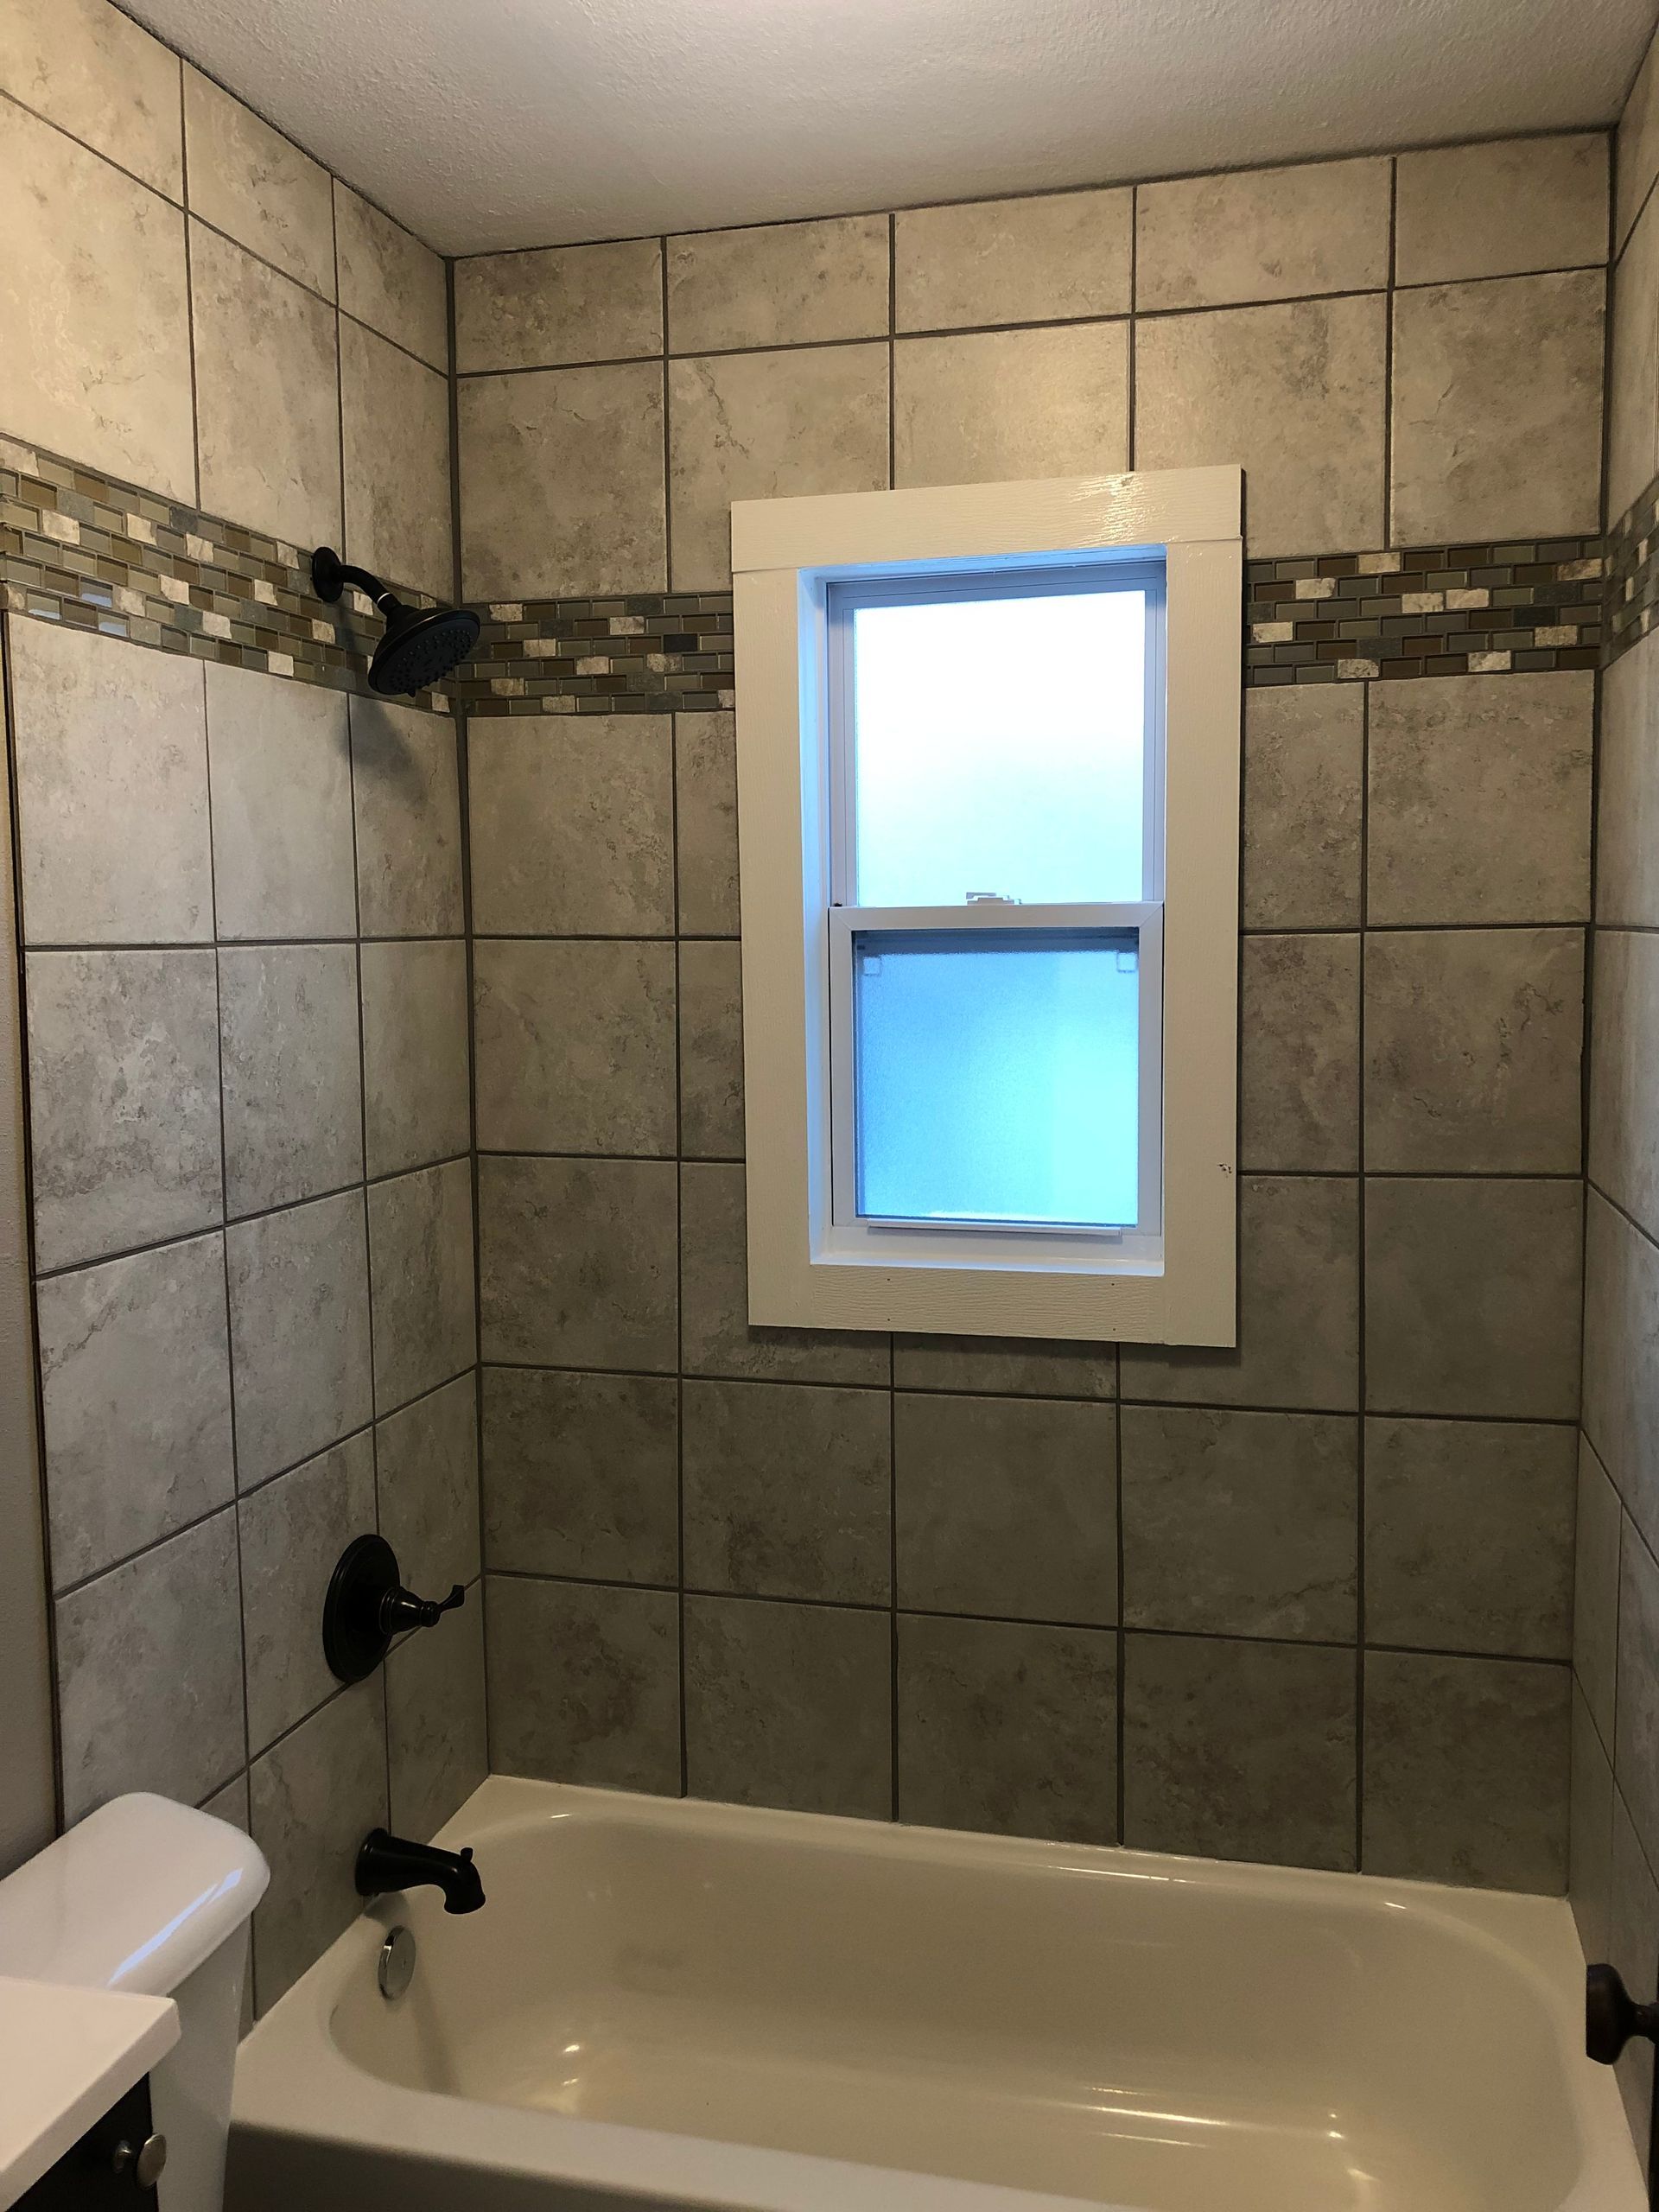 A bathroom with a bathtub and a window